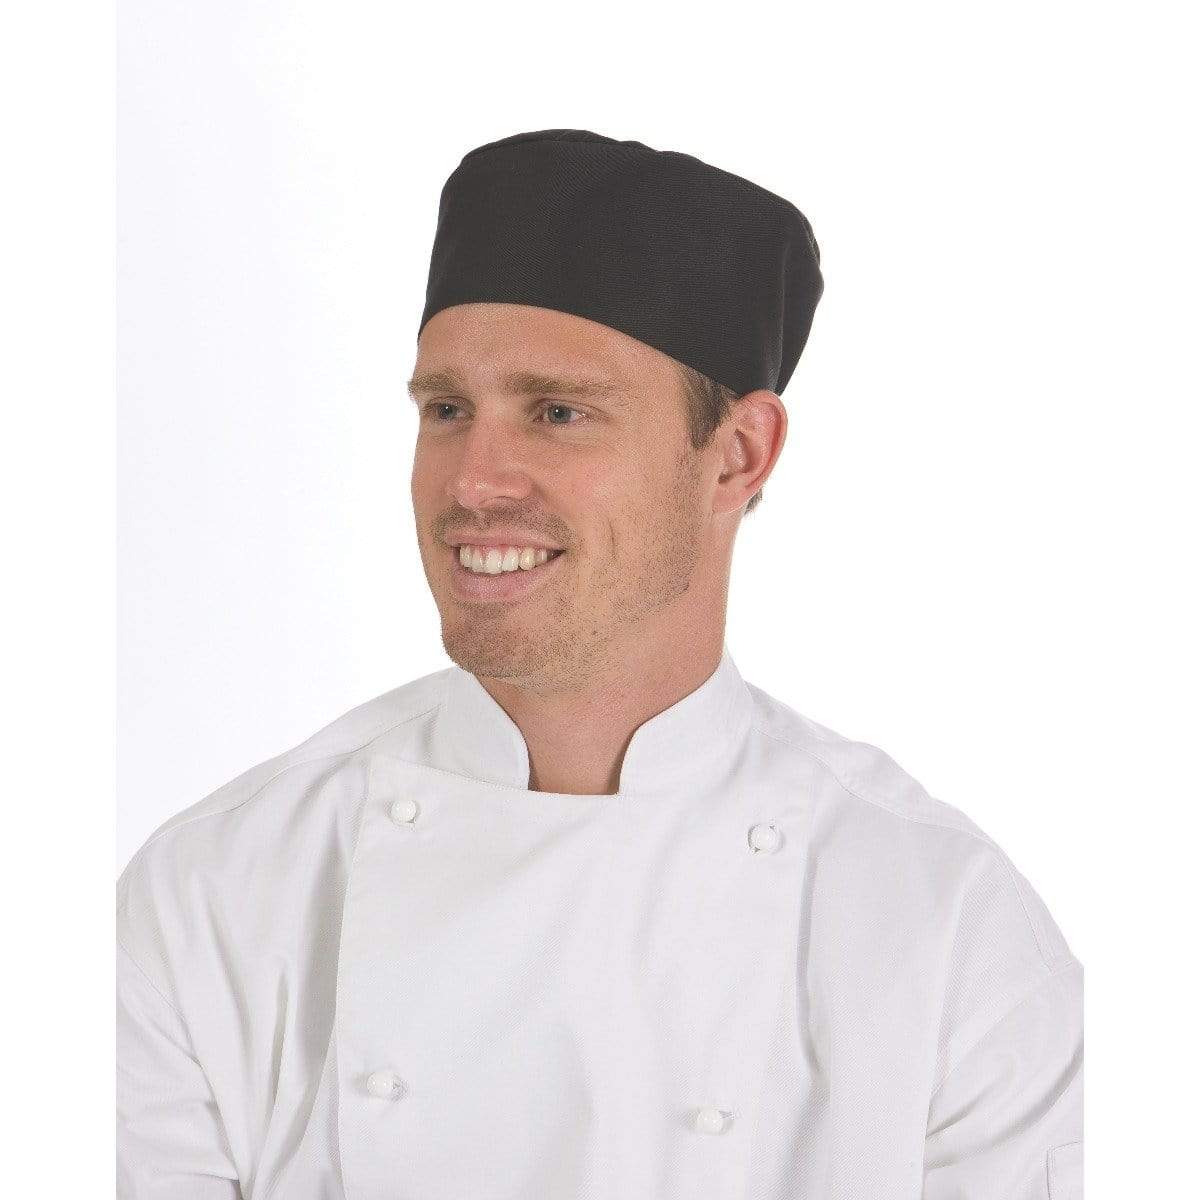 Dnc Workwear Flat Top Chef Hat - 1602 Hospitality & Chefwear DNC Workwear Navy One Size 